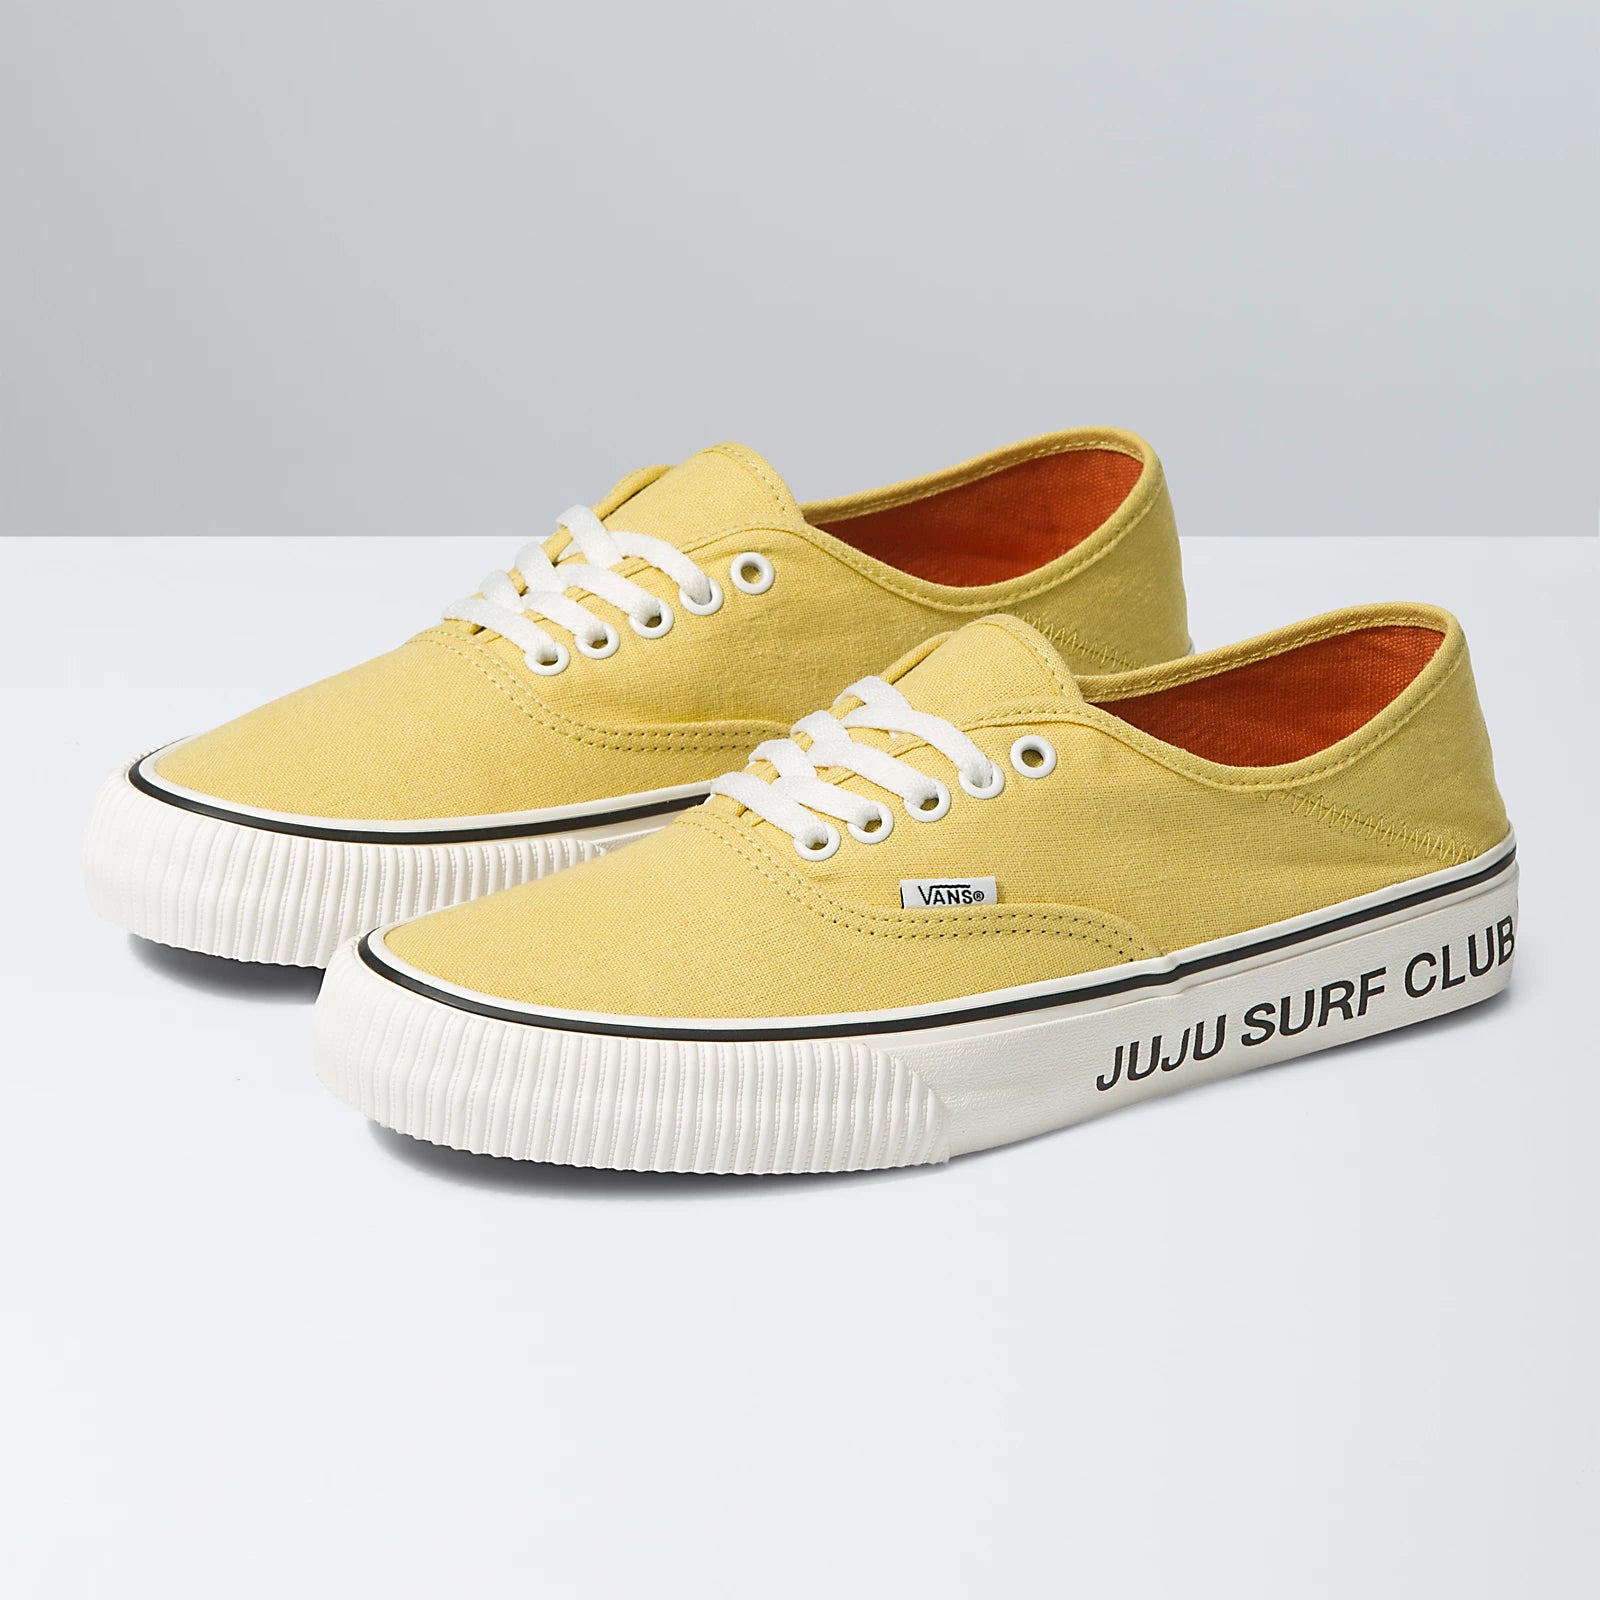 Vans X Juju Surf Club Authentic Shoes VR3 SF